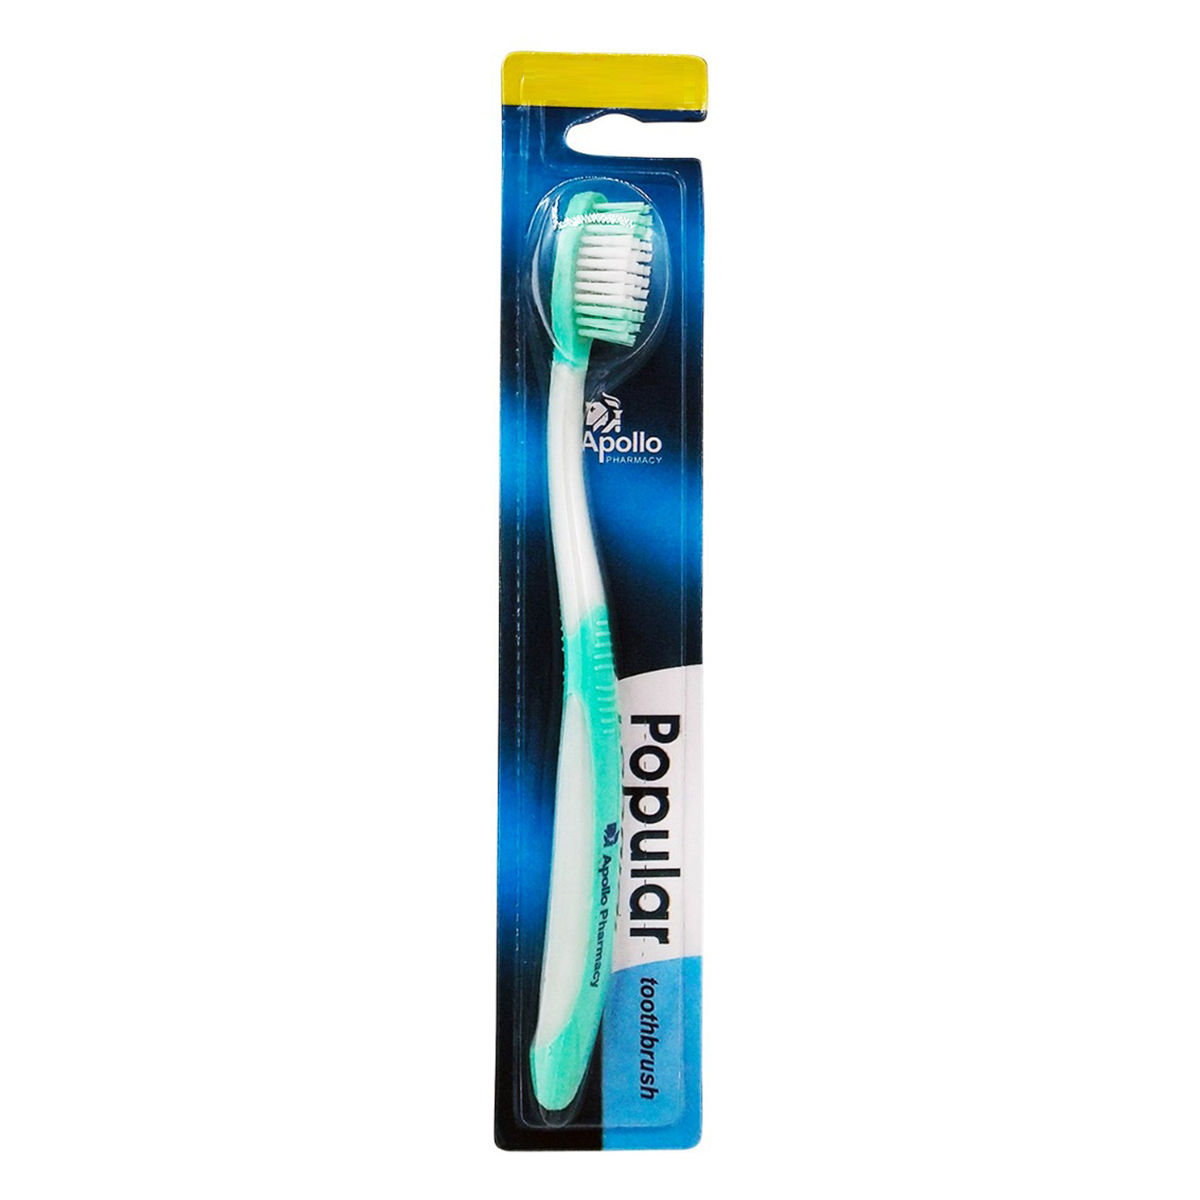 Buy Apollo Pharmacy Popular Toothbrush, 1 Count Online